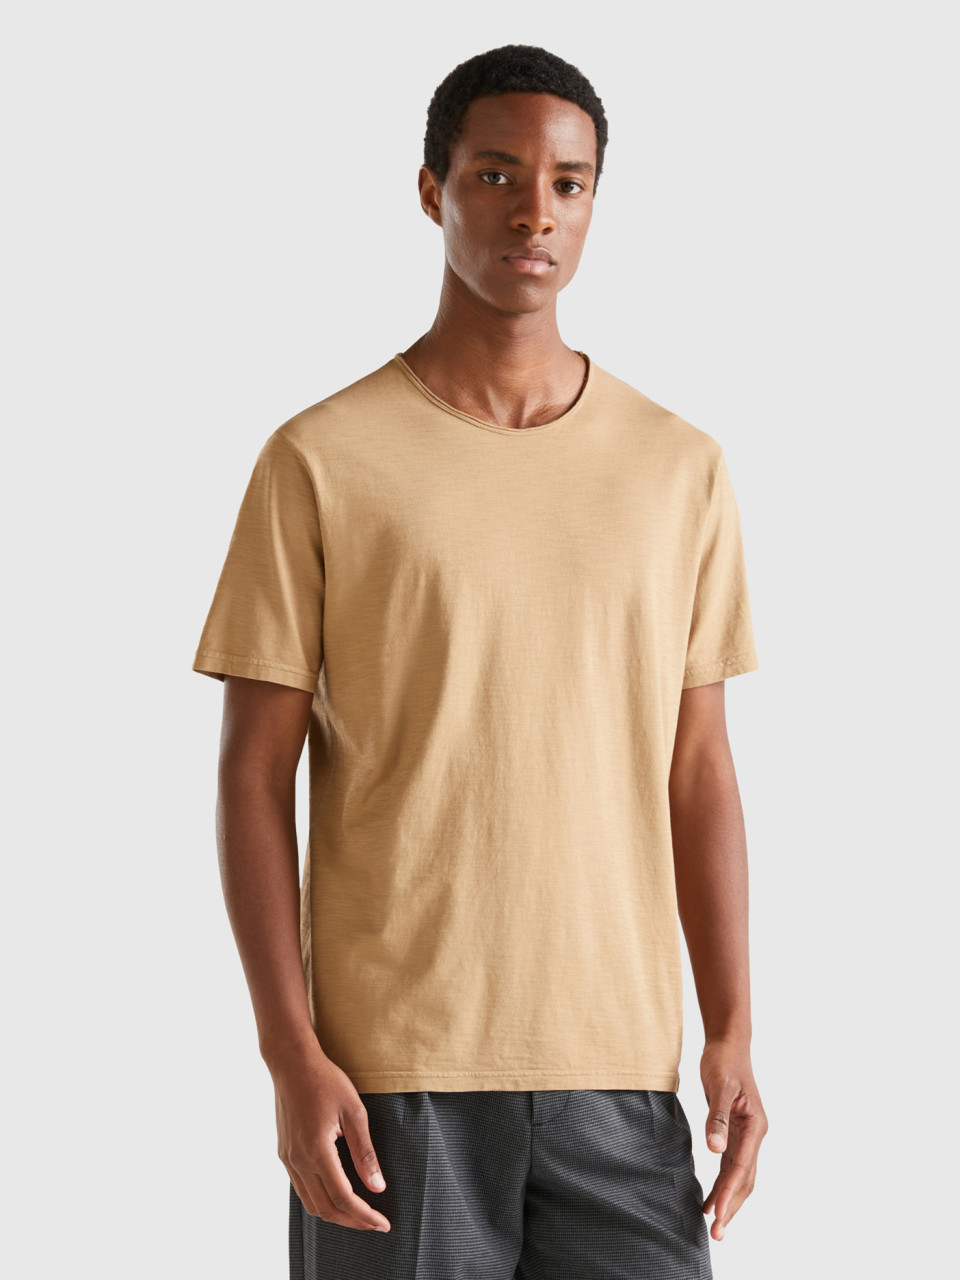 Benetton, Camel T-shirt In Slub Cotton, Camel, Men